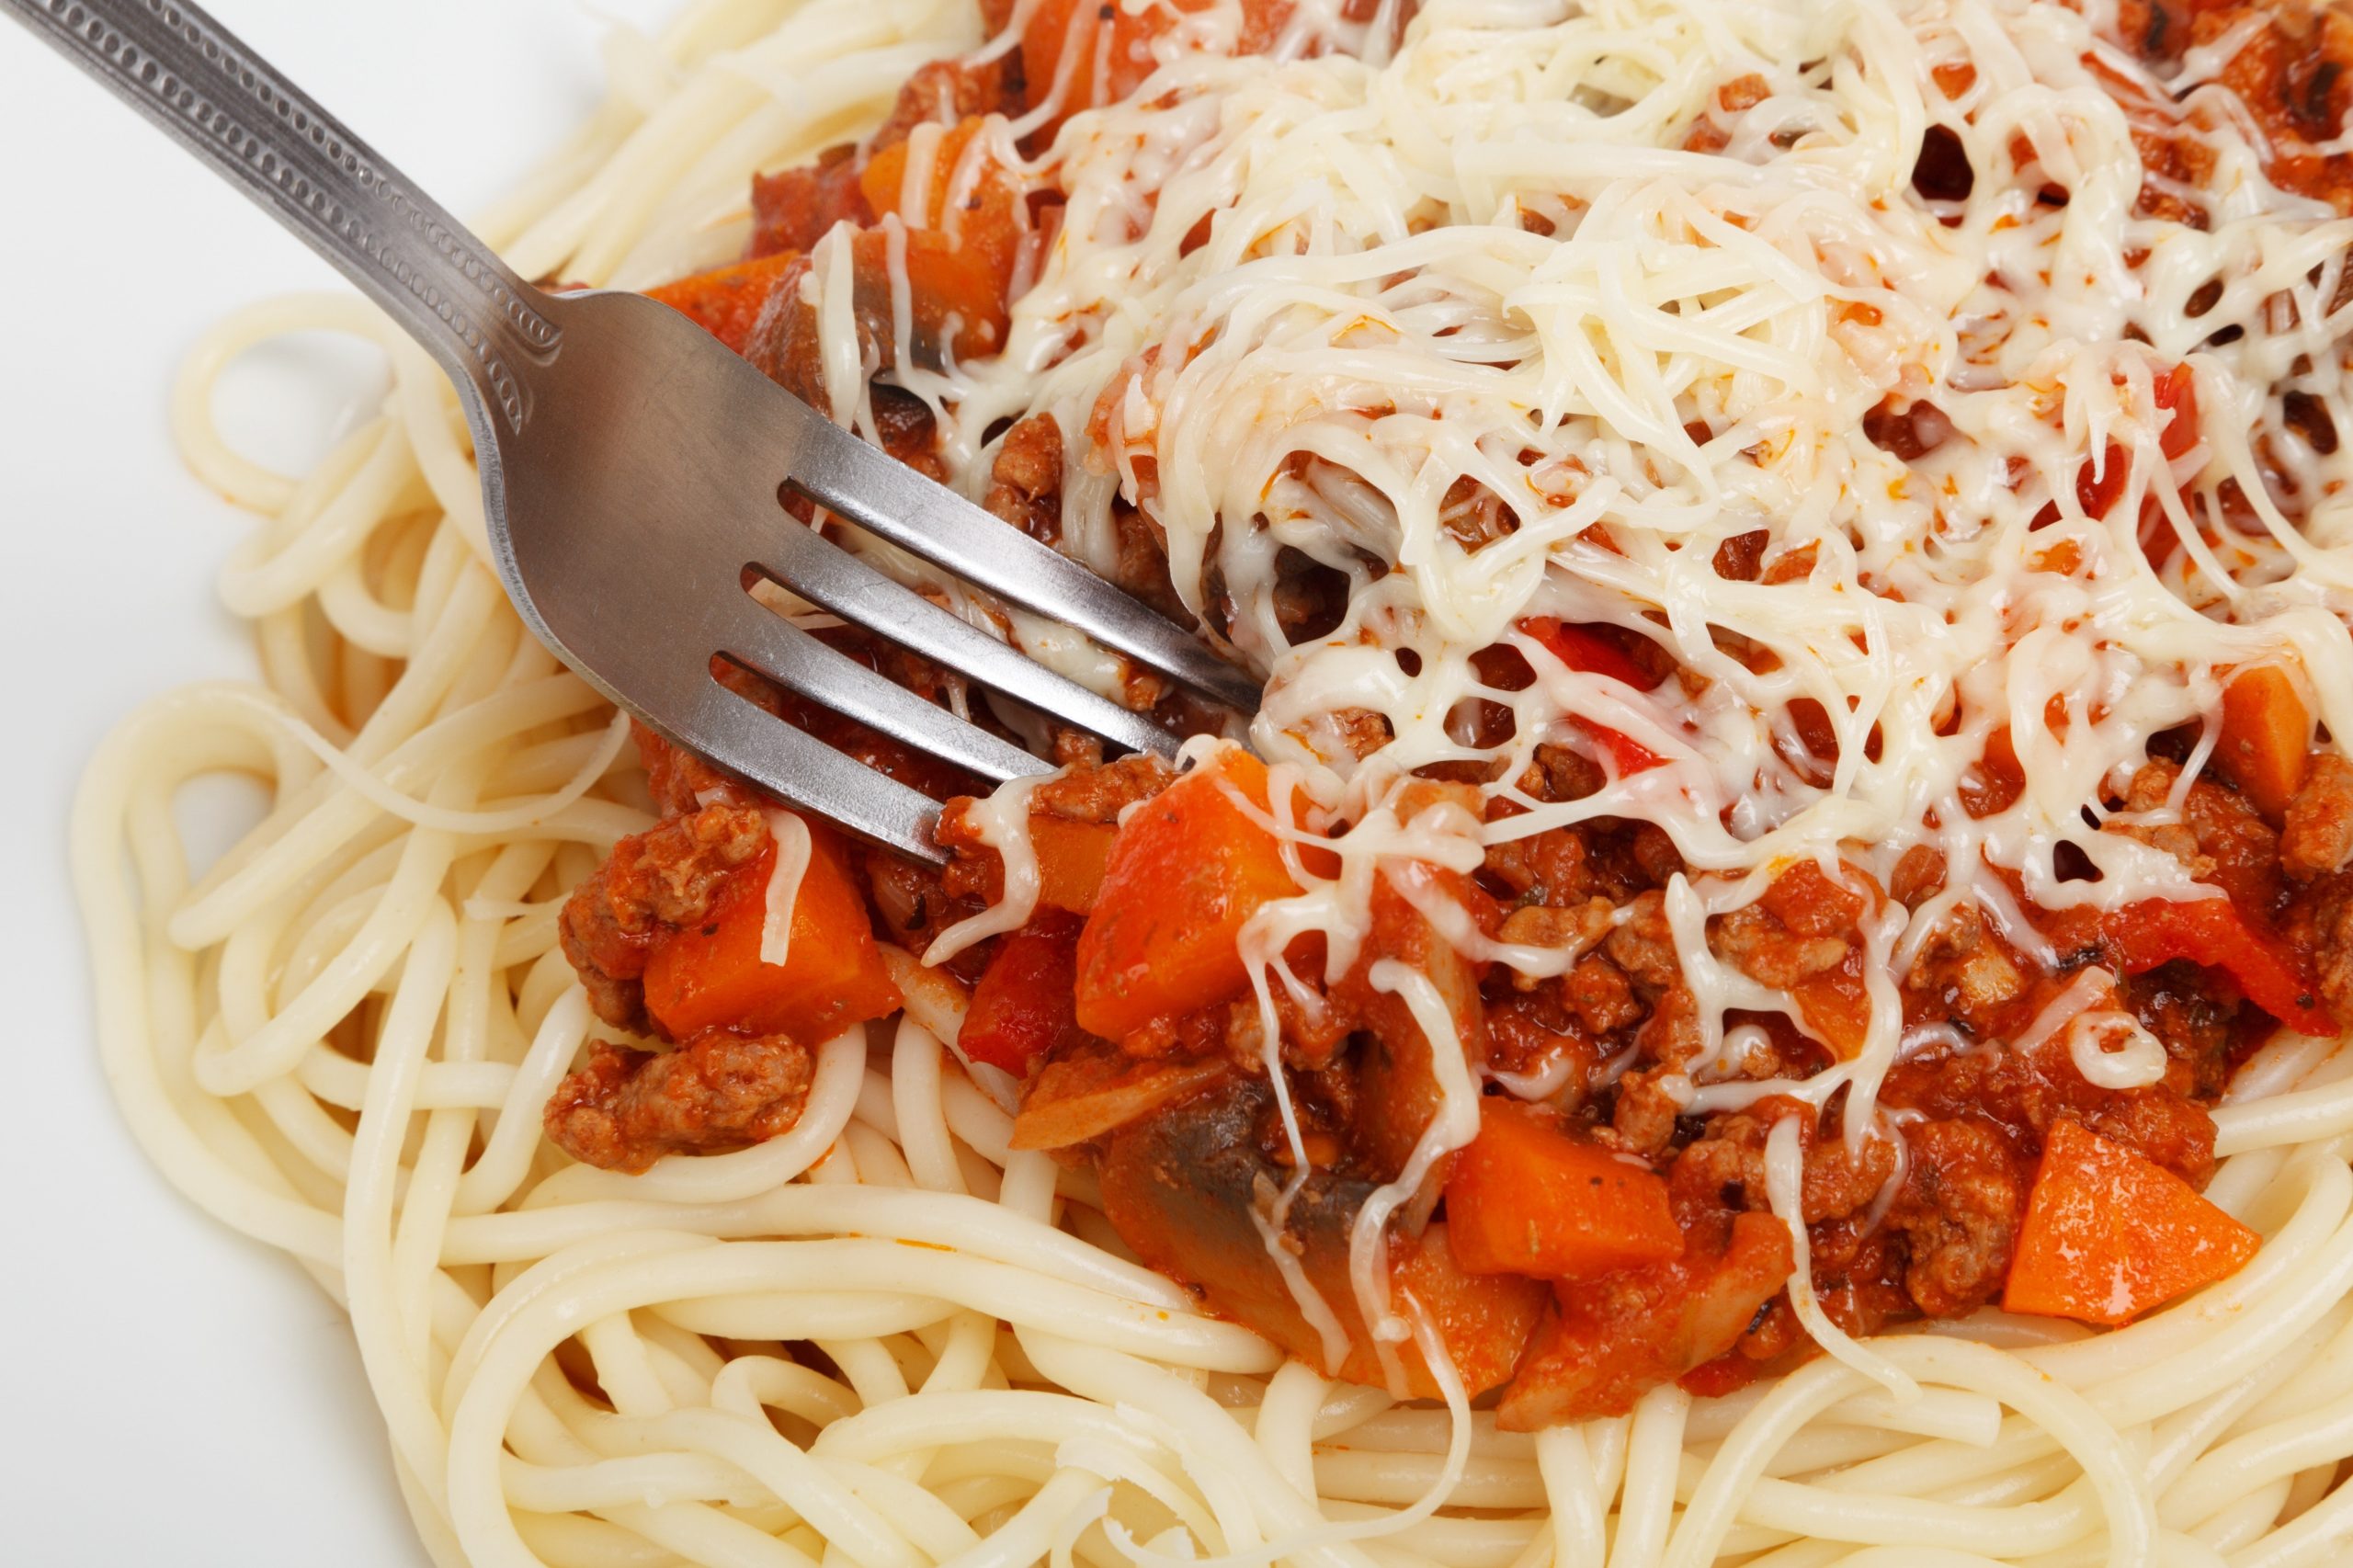 Comment éviter le code spaghetti ?